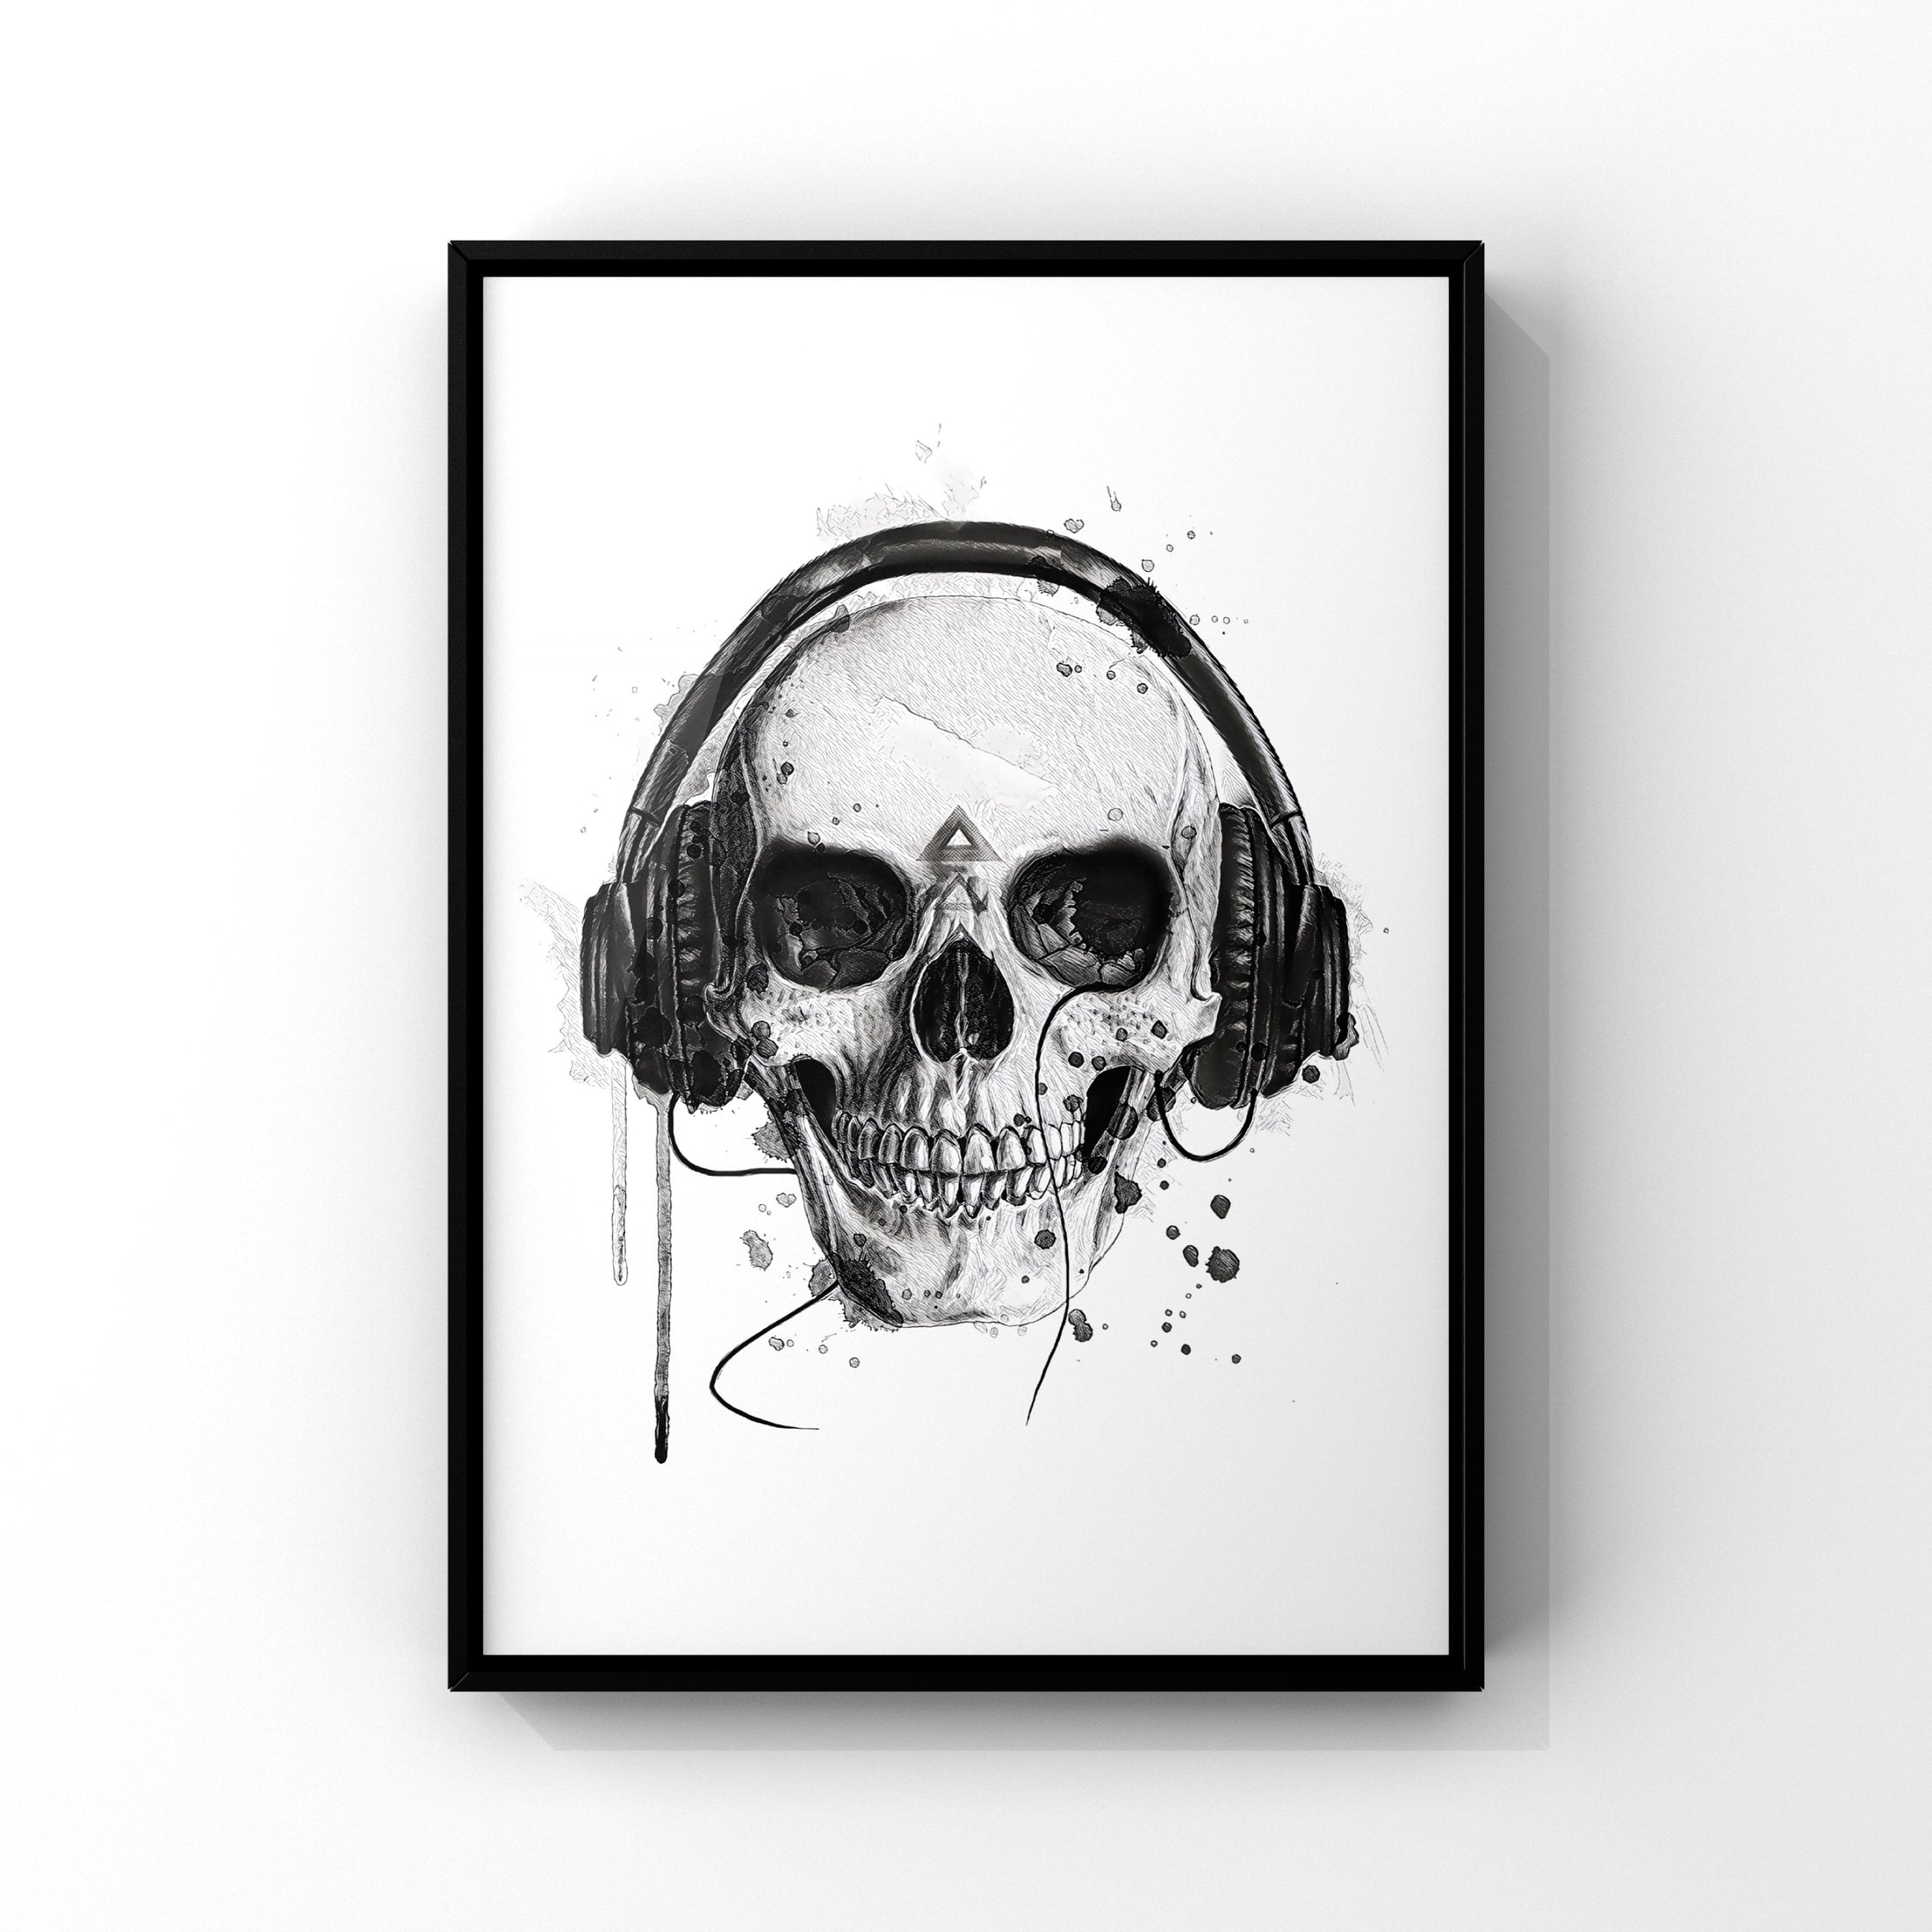 Skull headphones